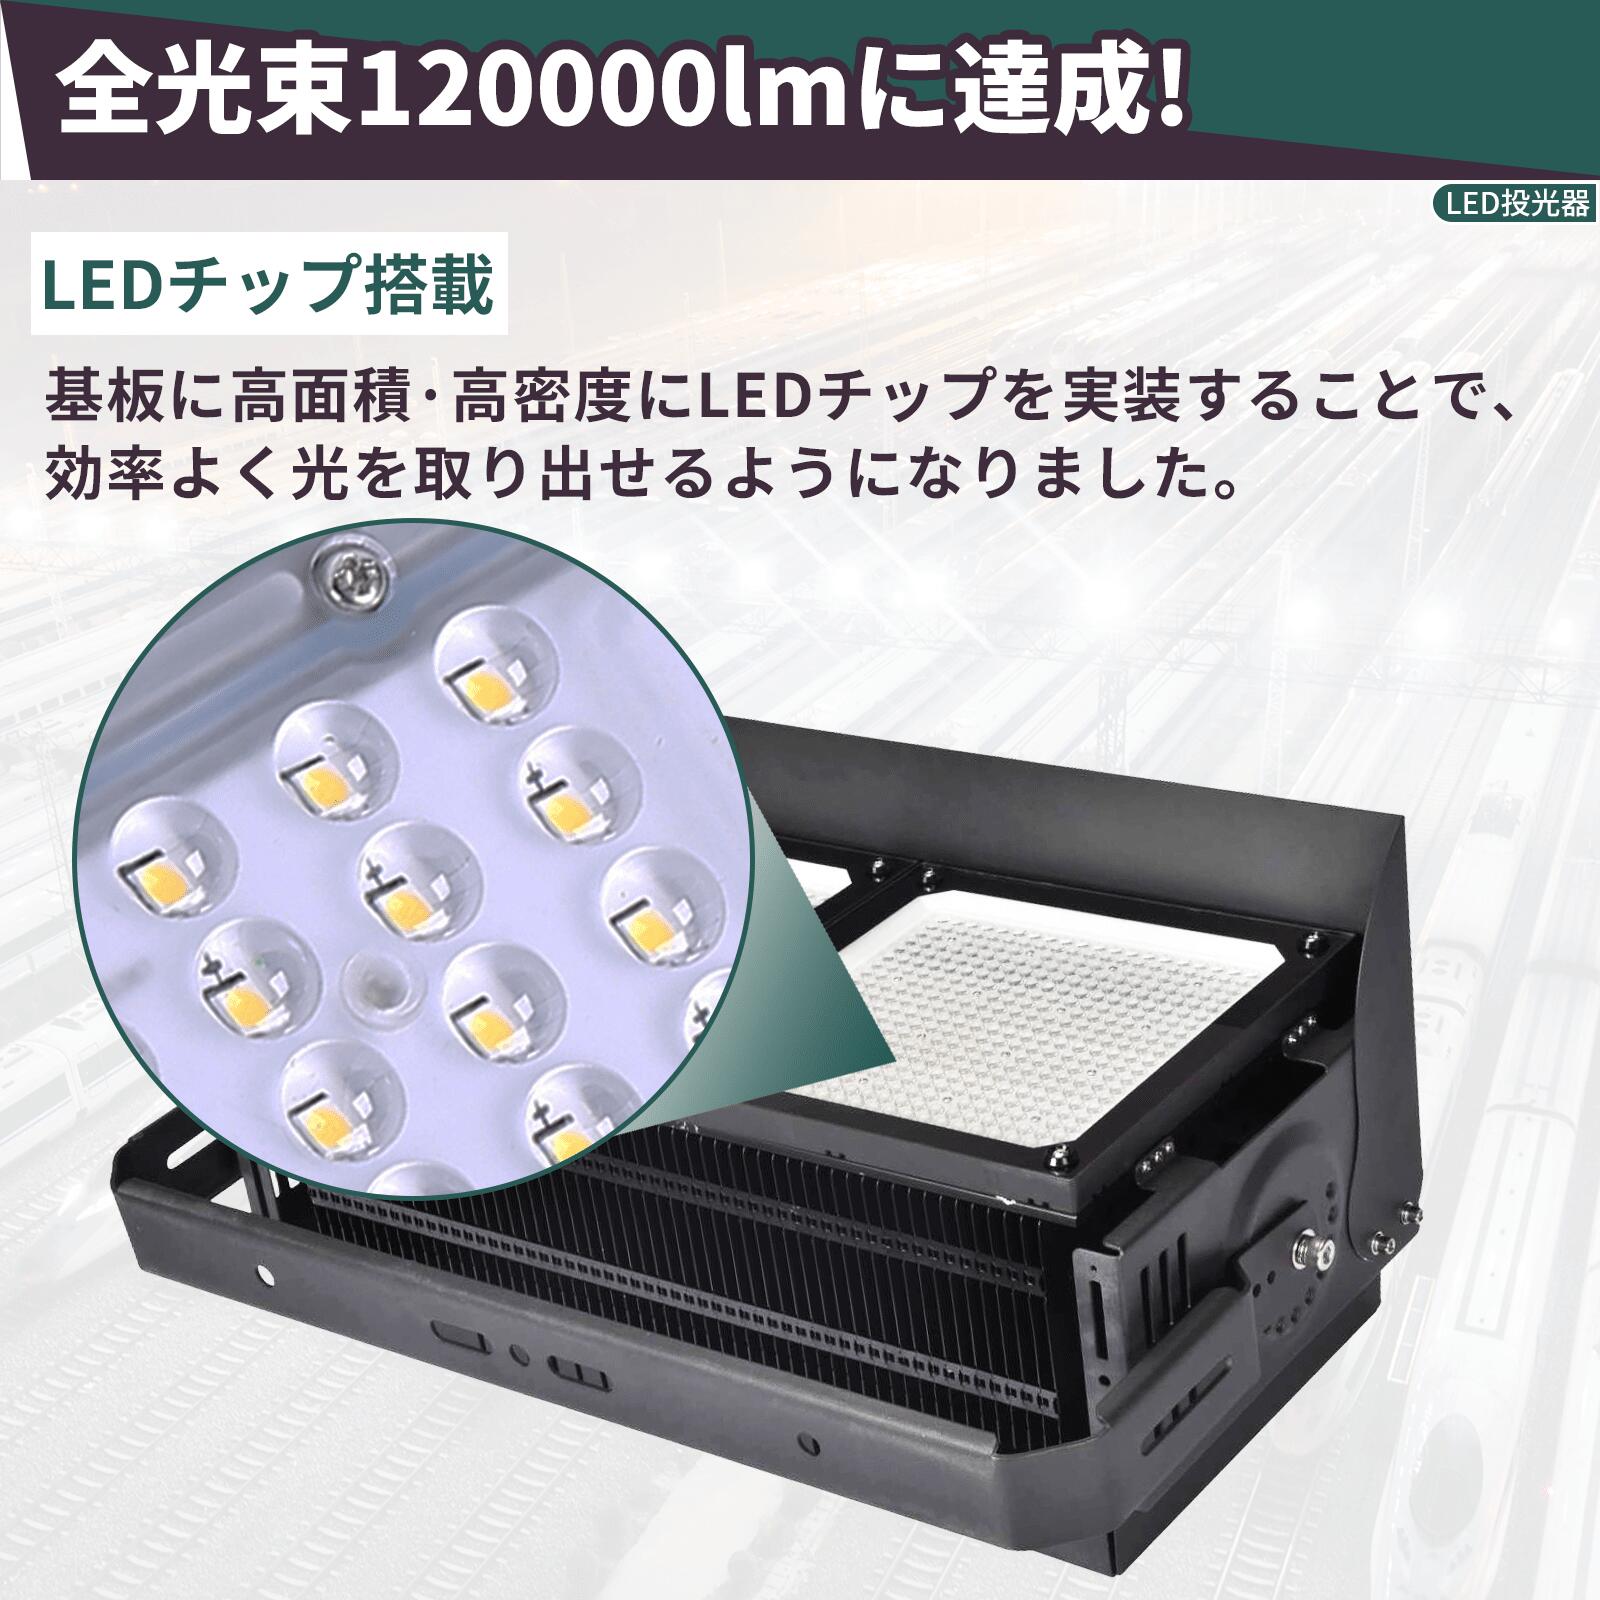 20台セット LED投光器 防雨型 昼光色 600W 120000LM 投光機 作業灯